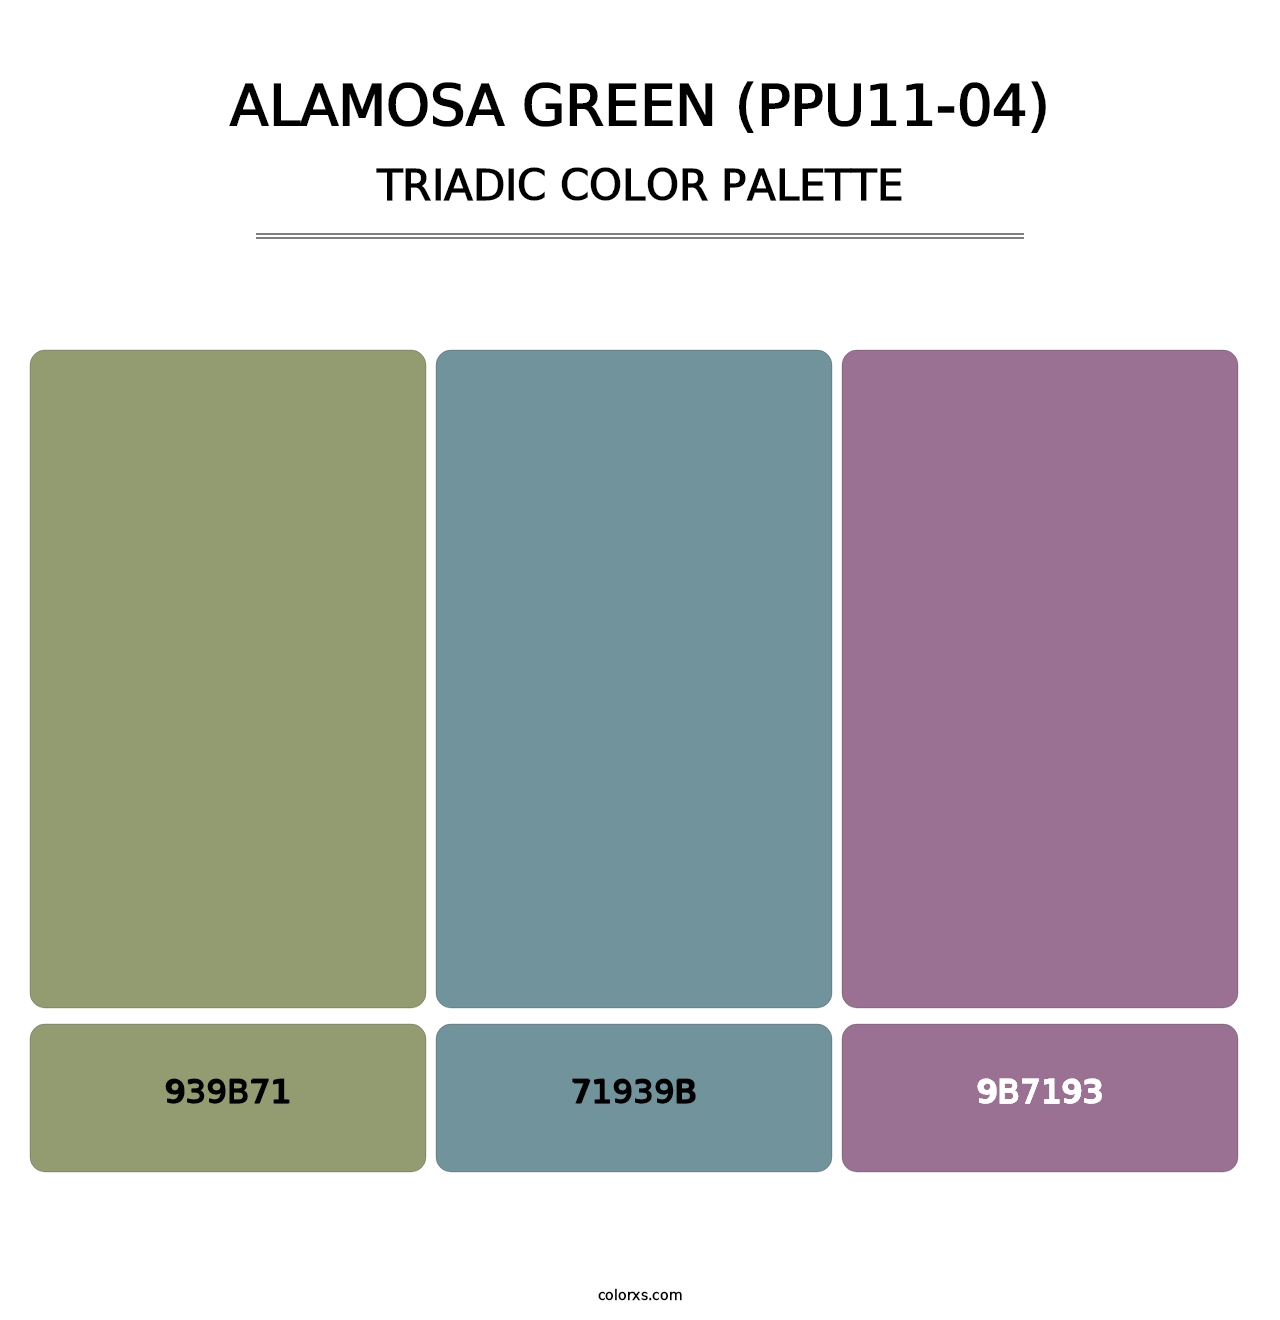 Alamosa Green (PPU11-04) - Triadic Color Palette